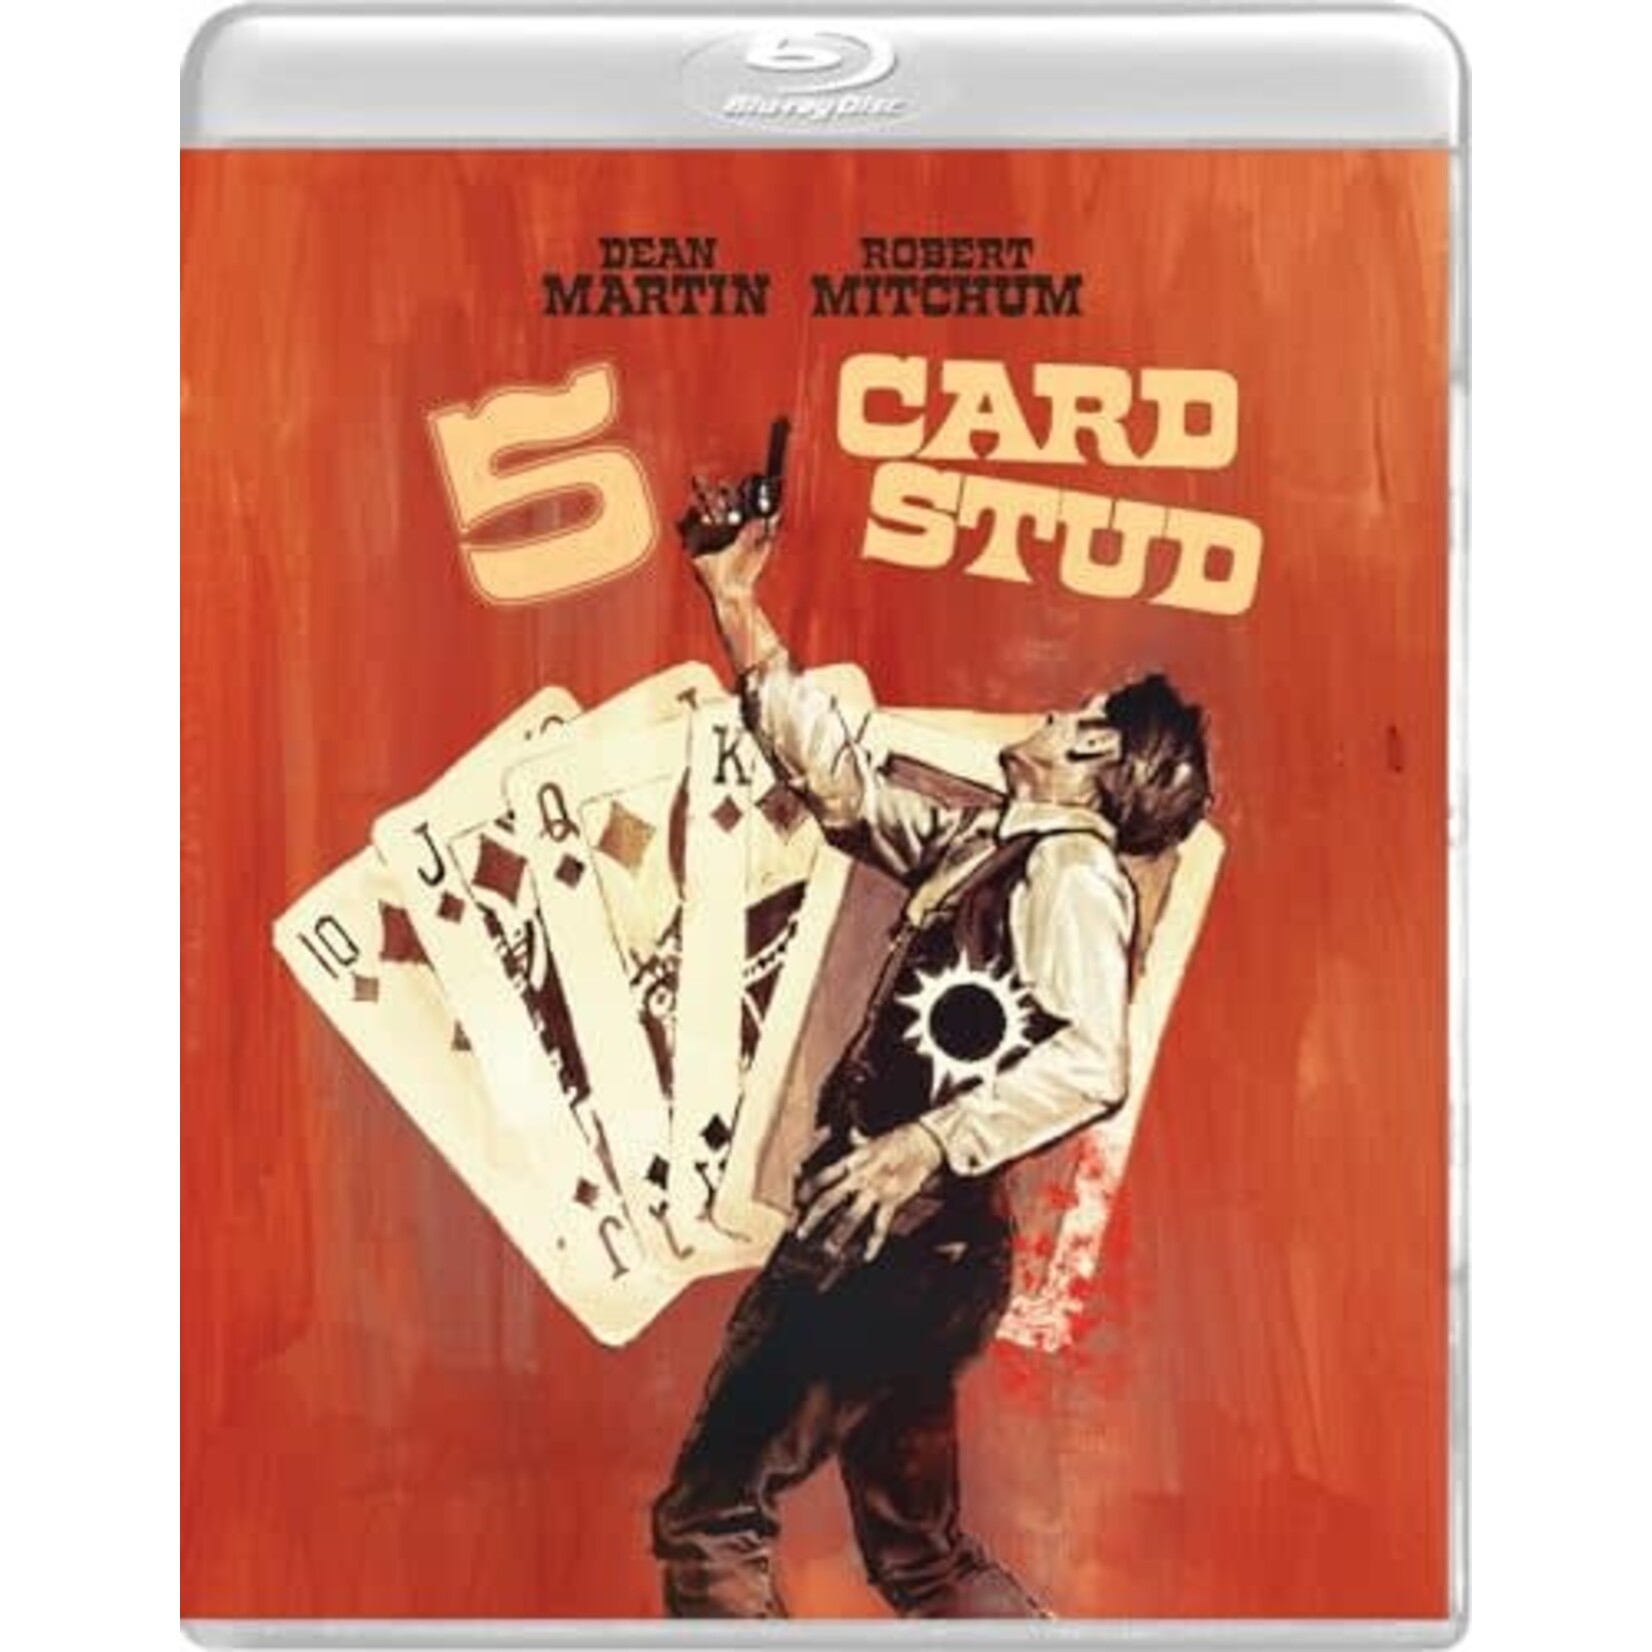 5 Card Stud (1968) [BRD]